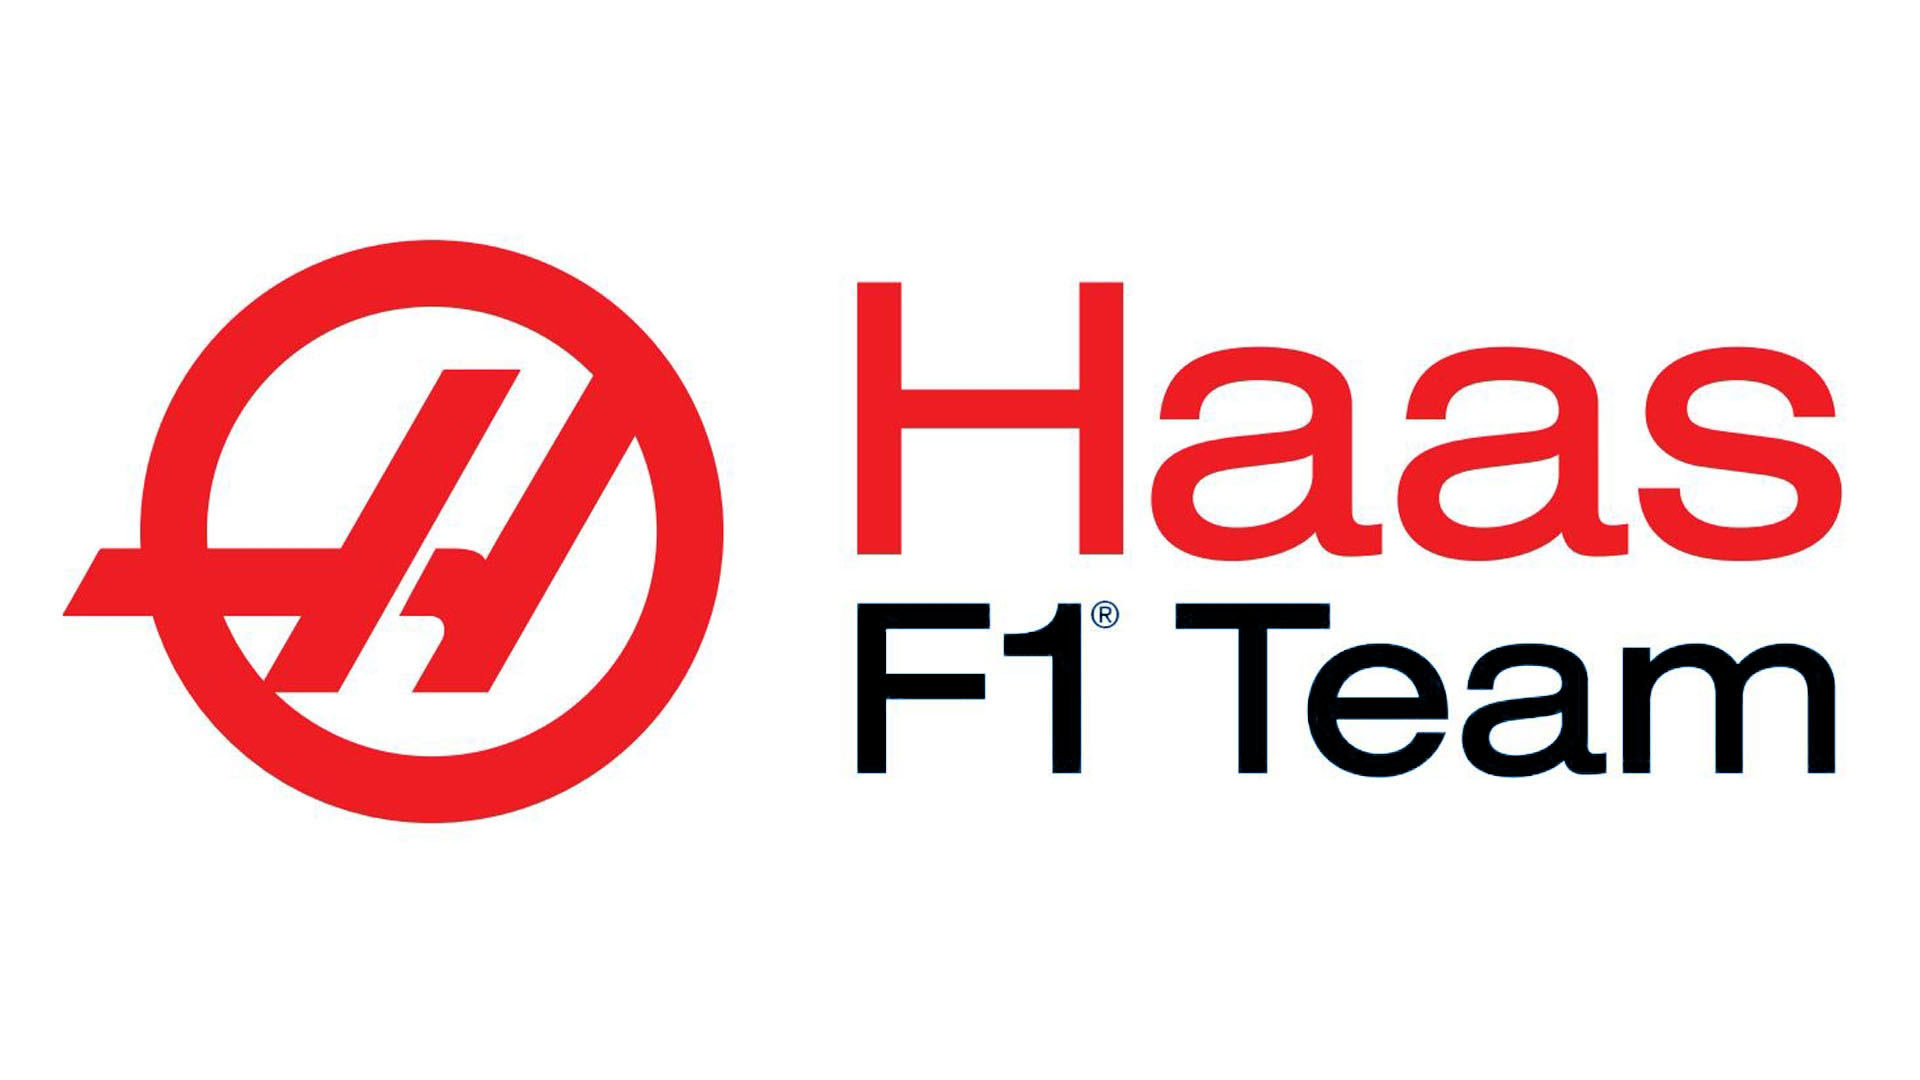 Haas F1 Team, logo